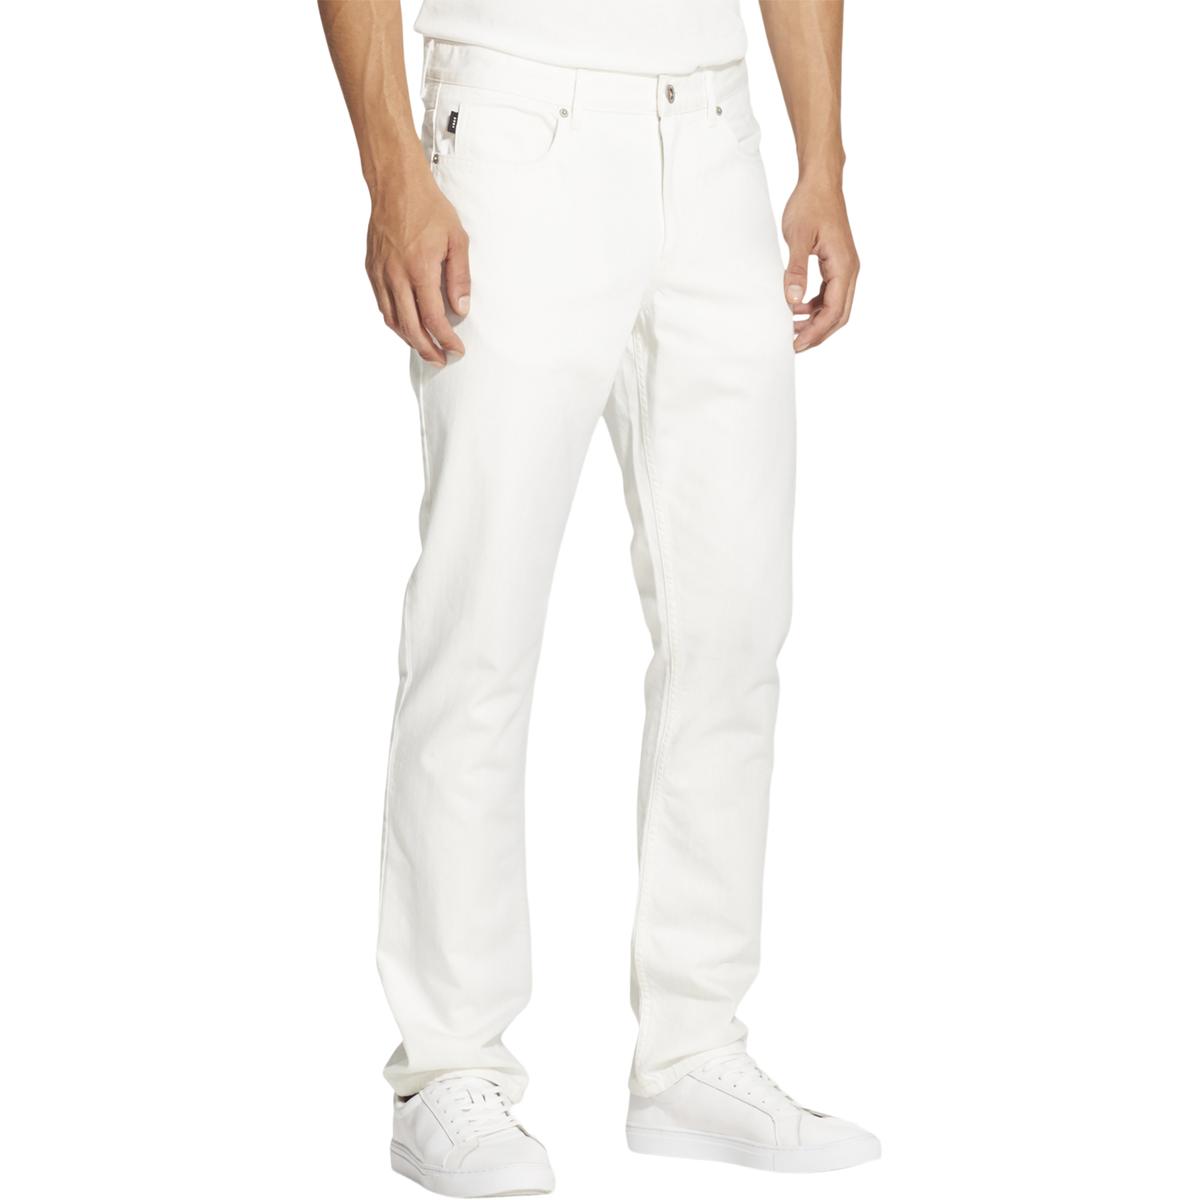 DKNY Mens St Marks White Denim Mid Rise Casual Slim Jeans 33/30 BHFO 8505